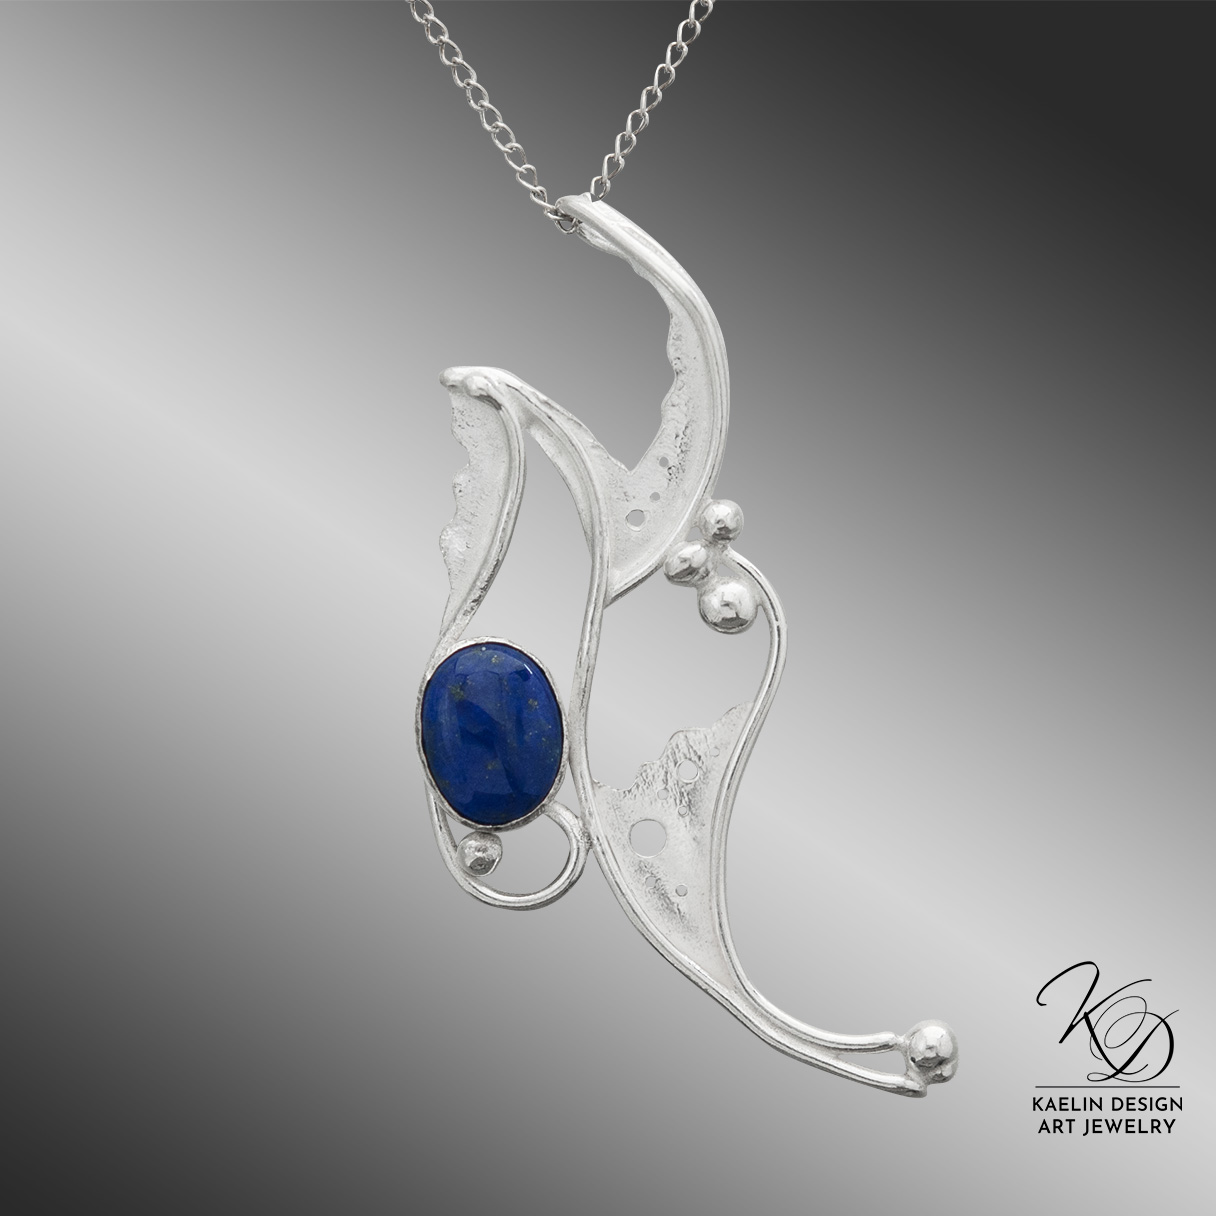 Breaking Waves Lapis Lazuli Sterling Silver Art Jewelry Pendant by Kaelin Design